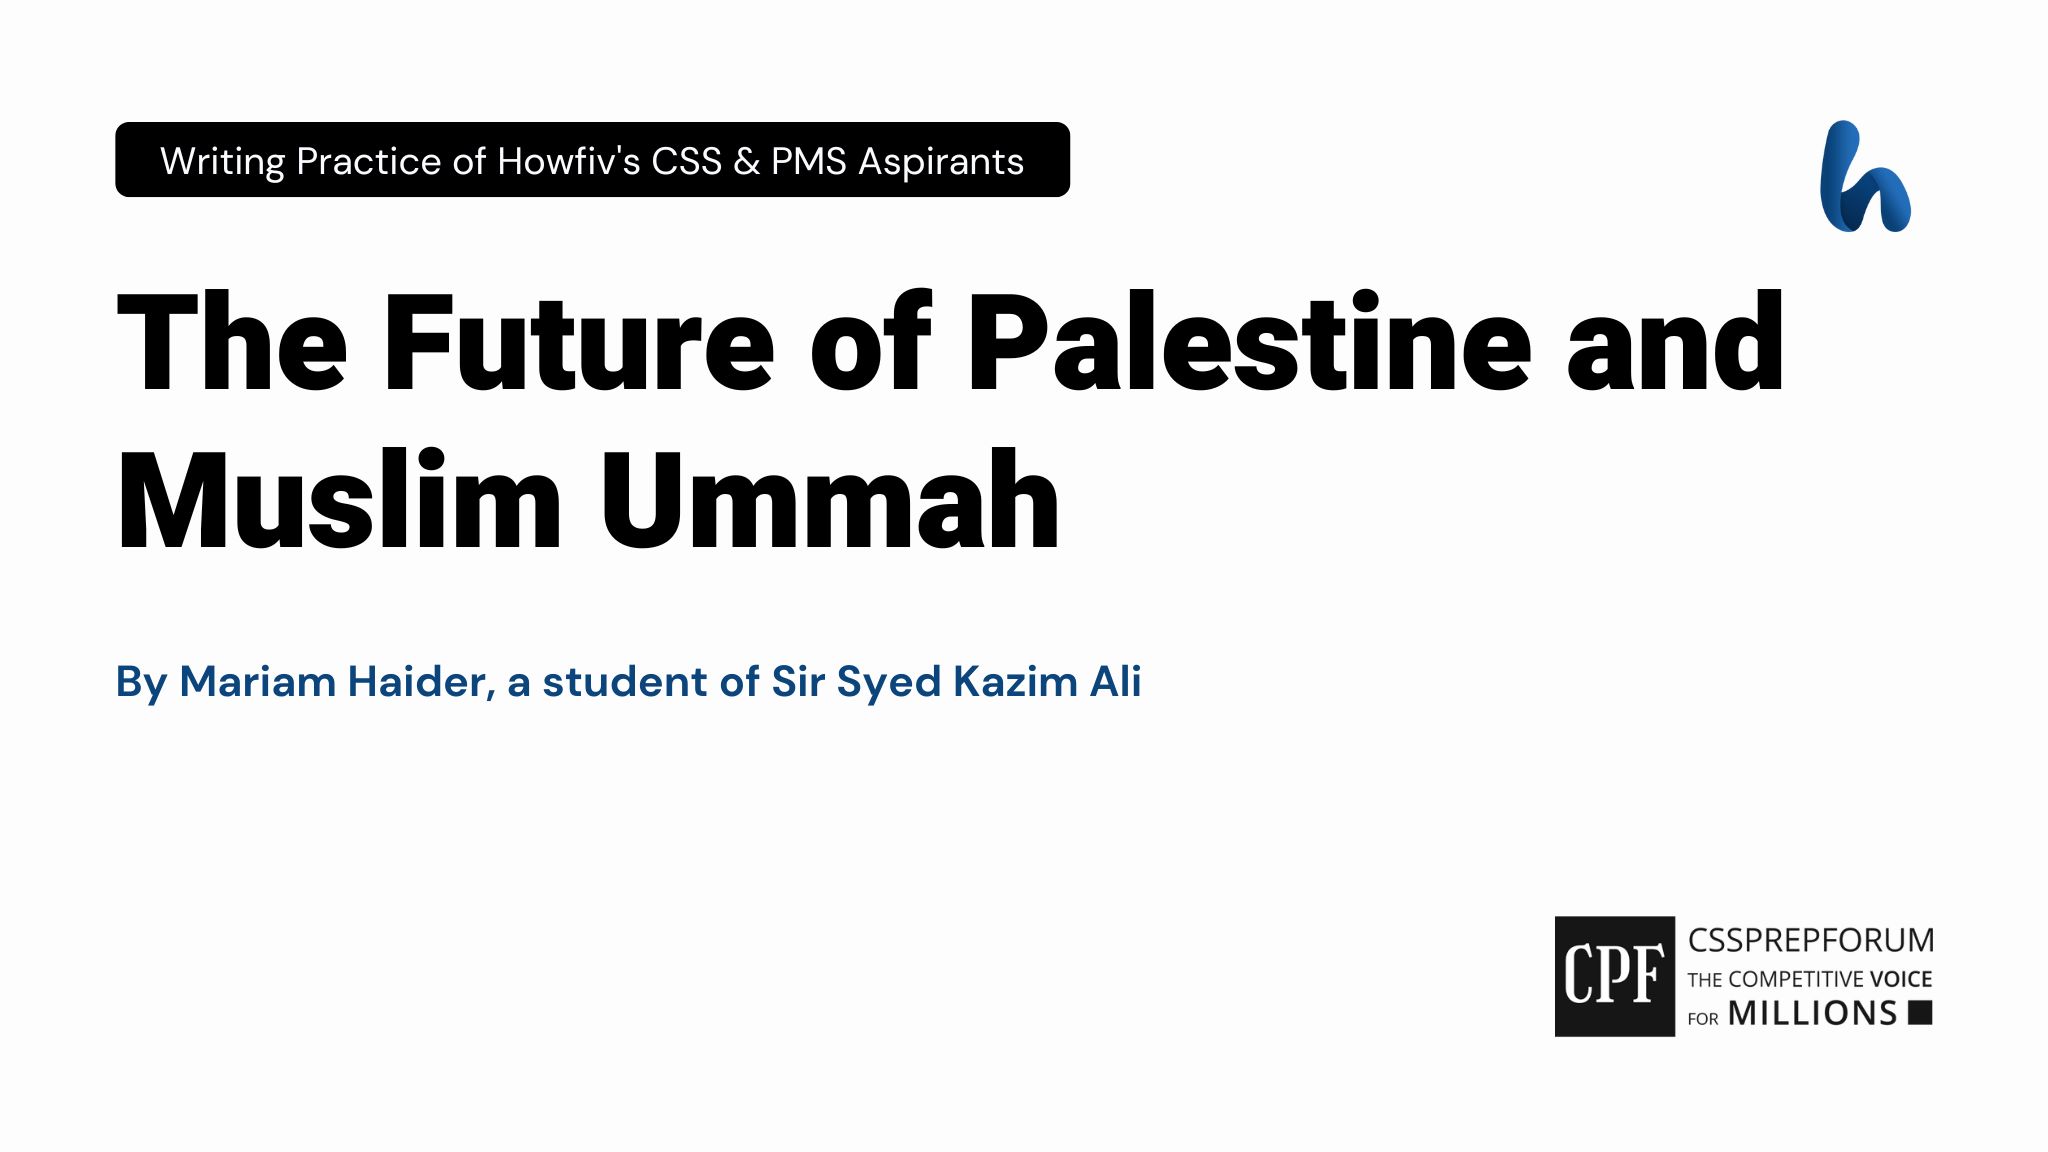 The Future of Palestine and Muslim Ummah by Mariam Haider